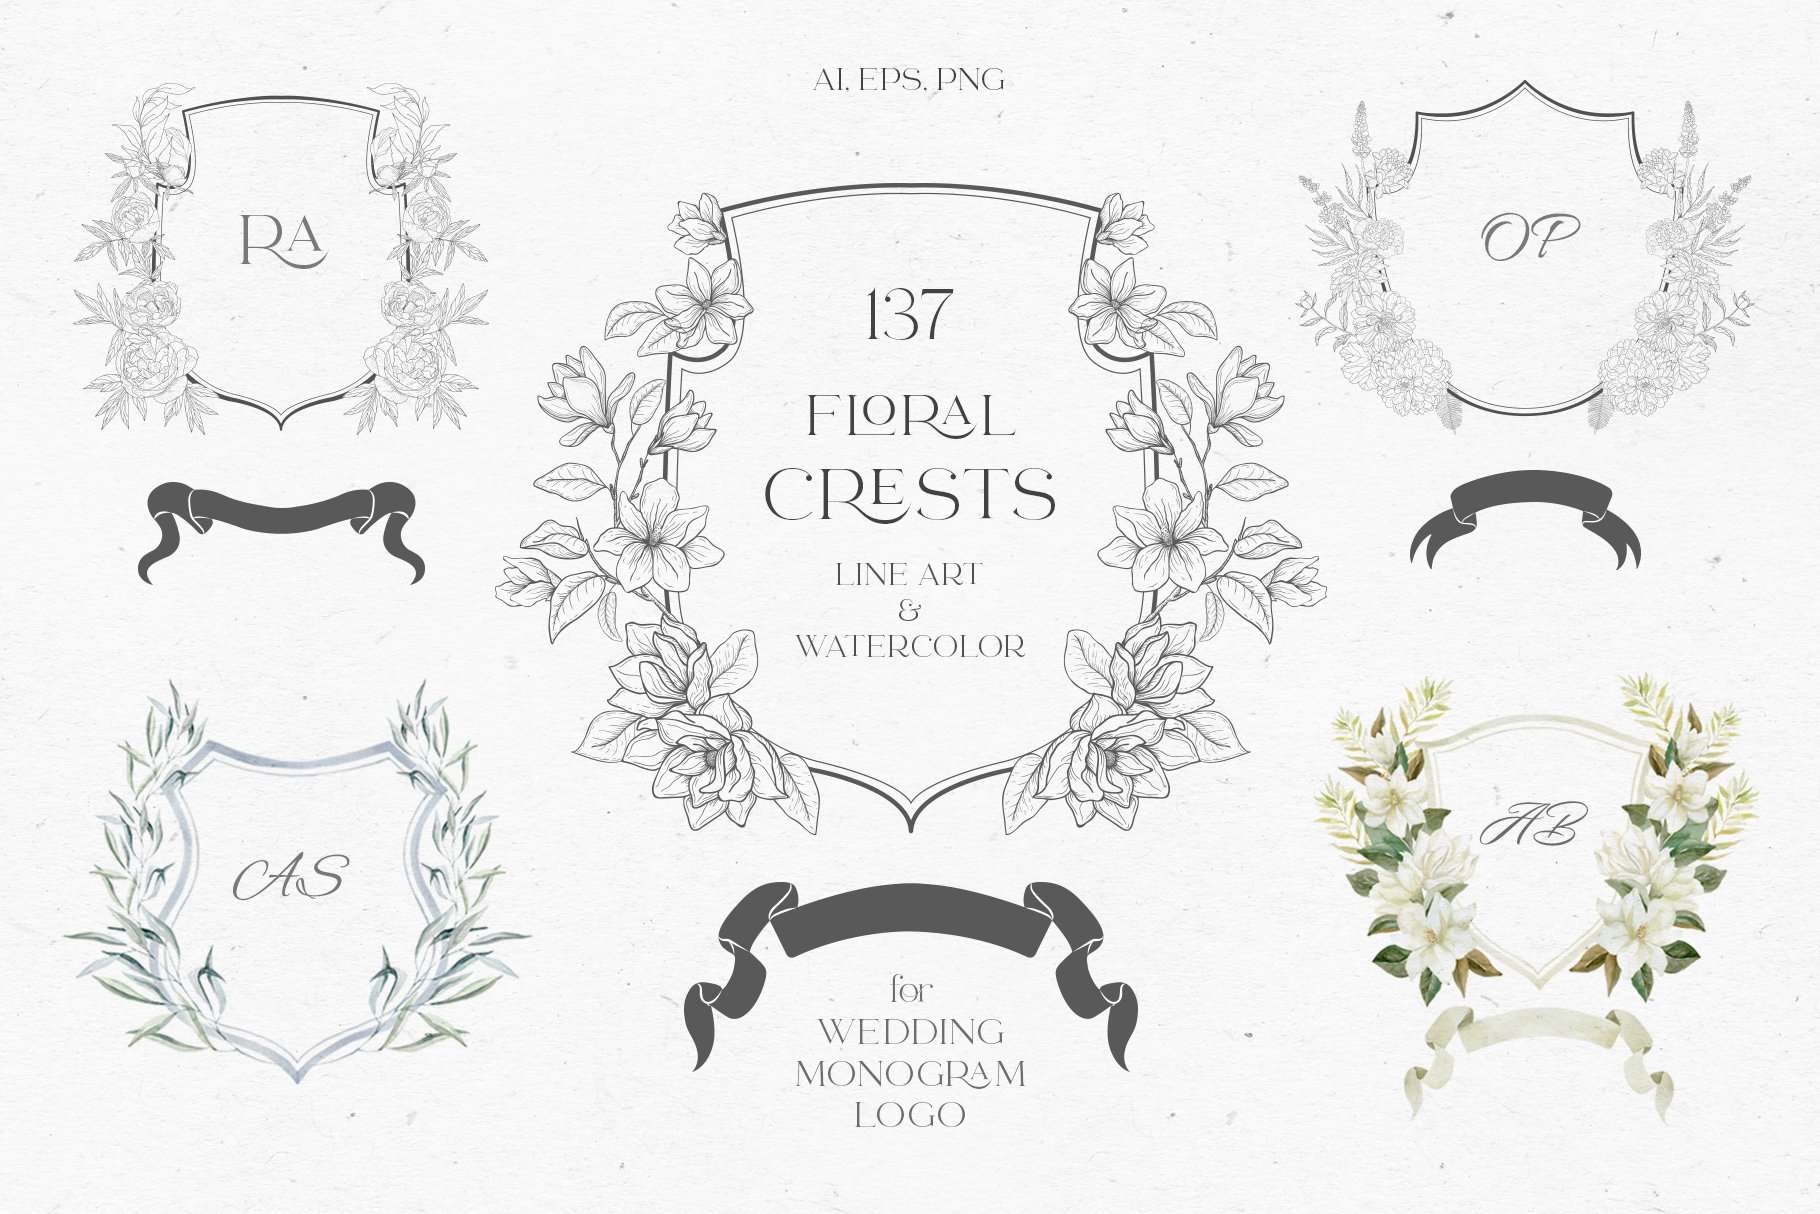 Floral Crests for Wedding & Monogram cover image.